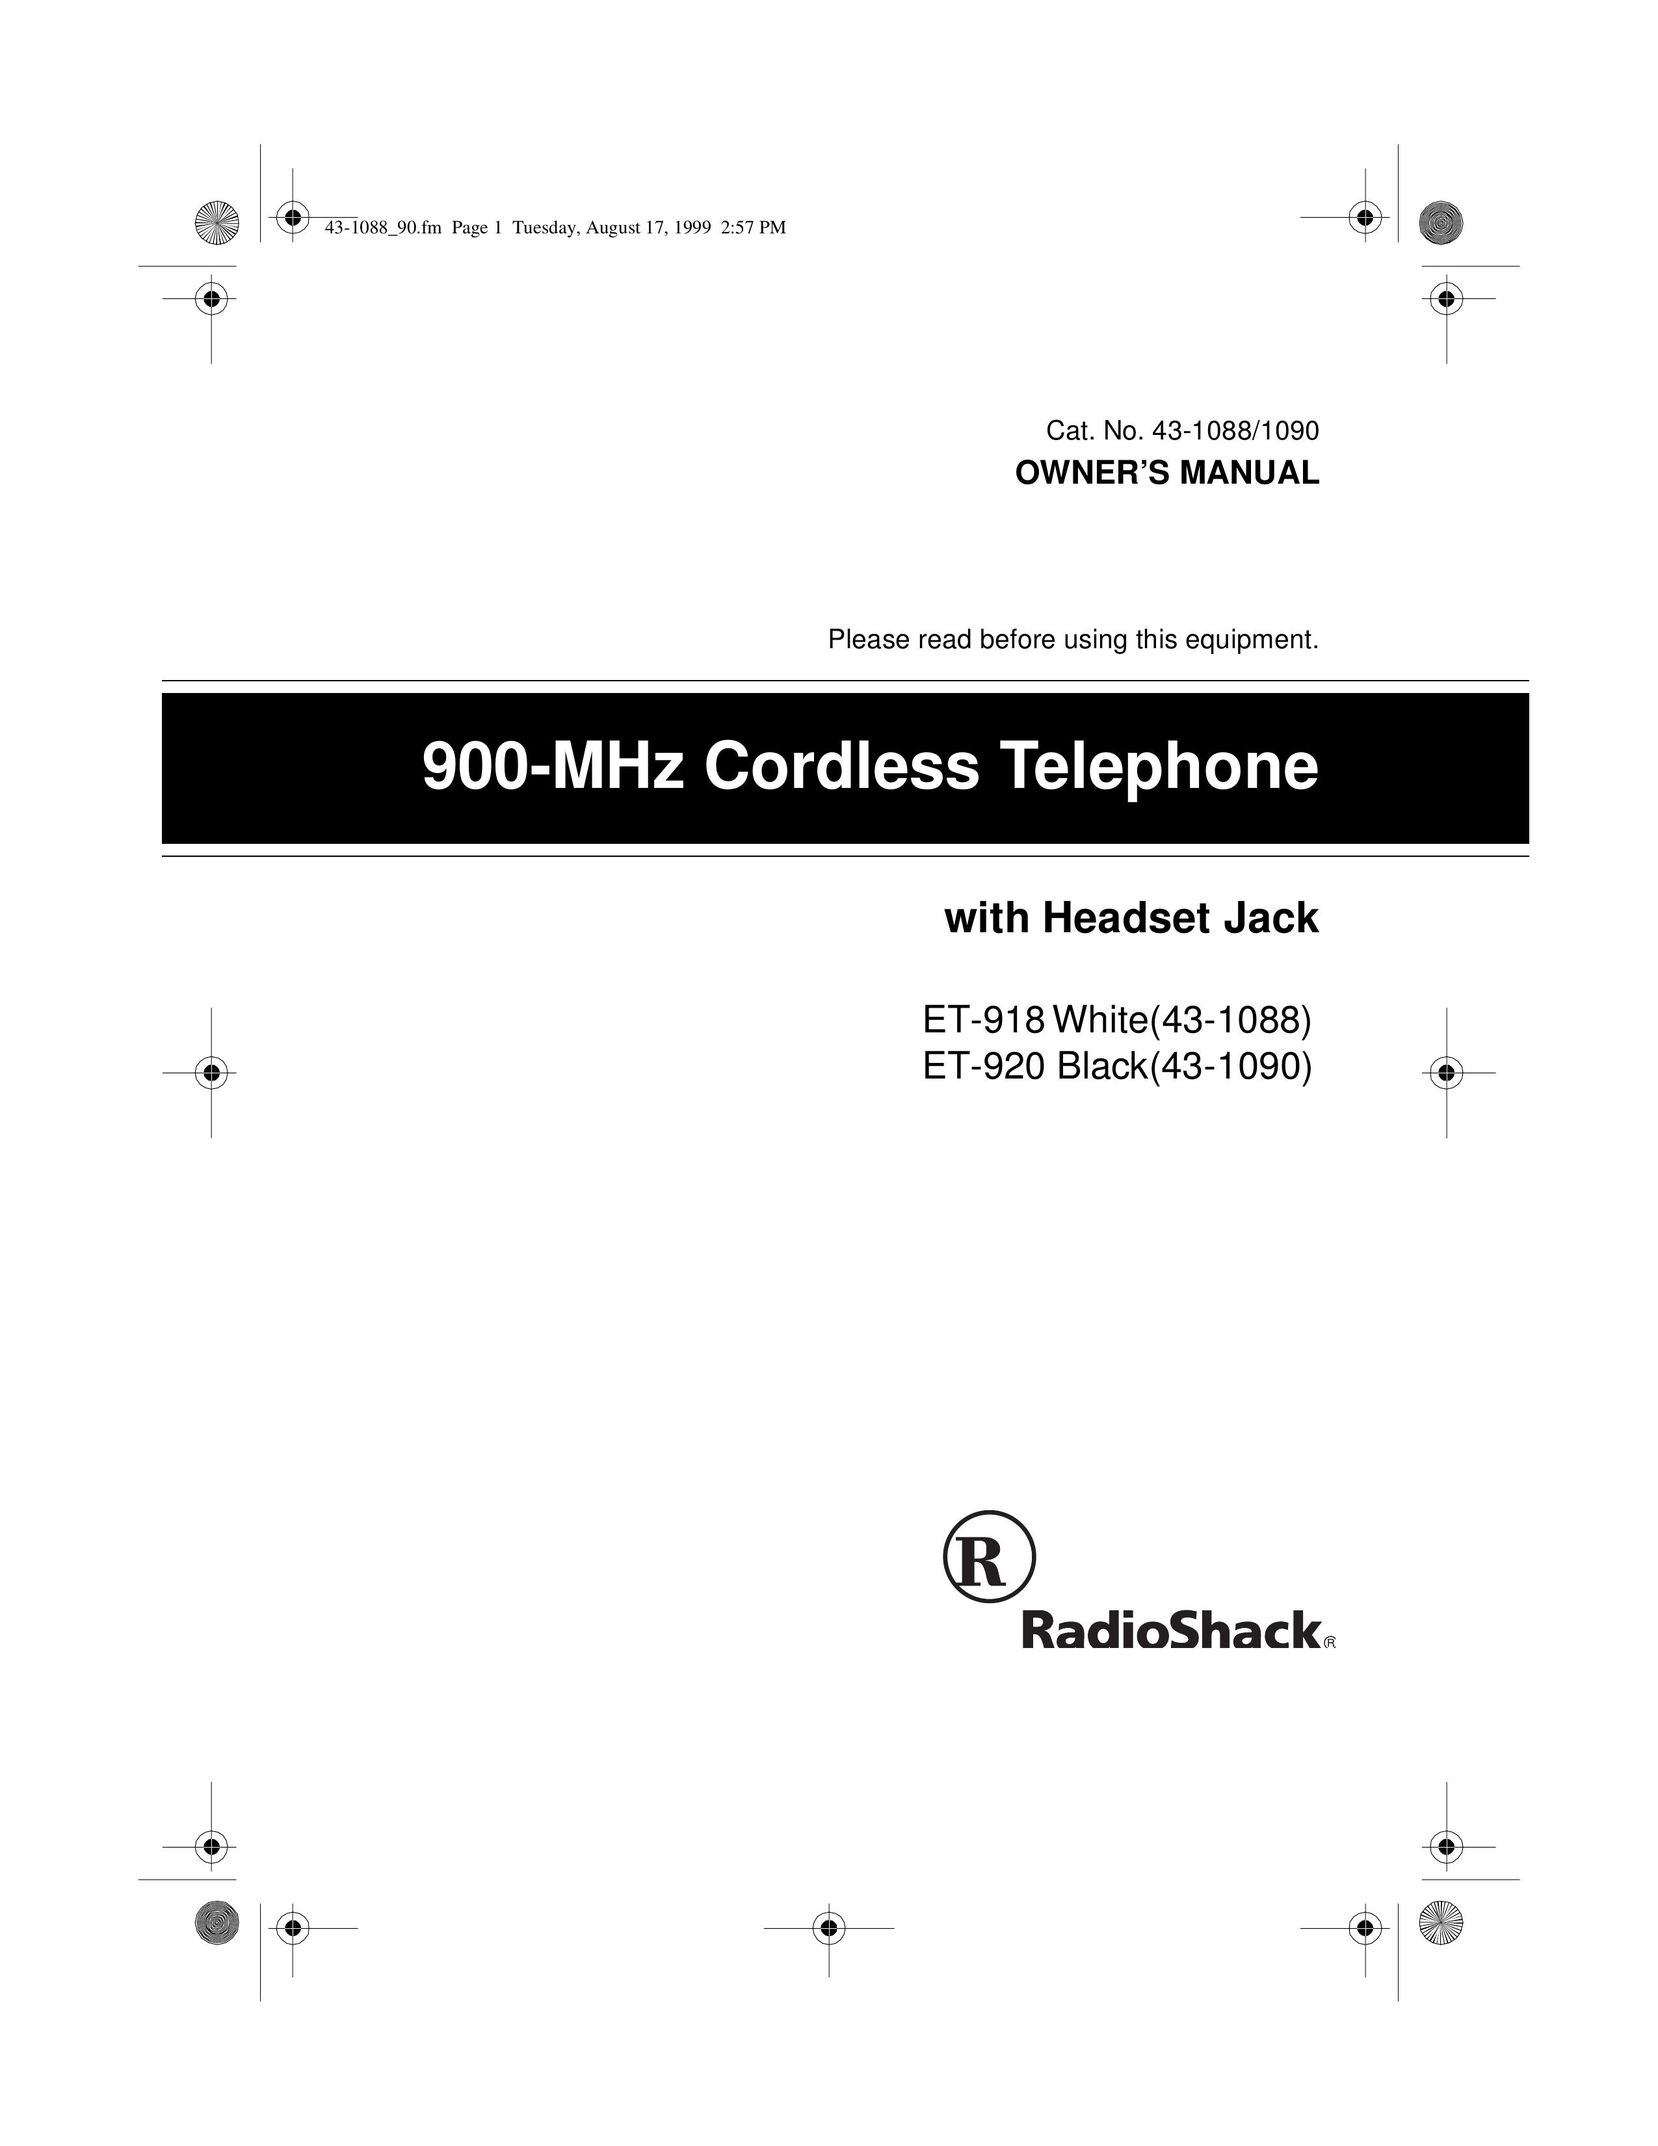 Radio Shack 43-1088/90 Cordless Telephone User Manual